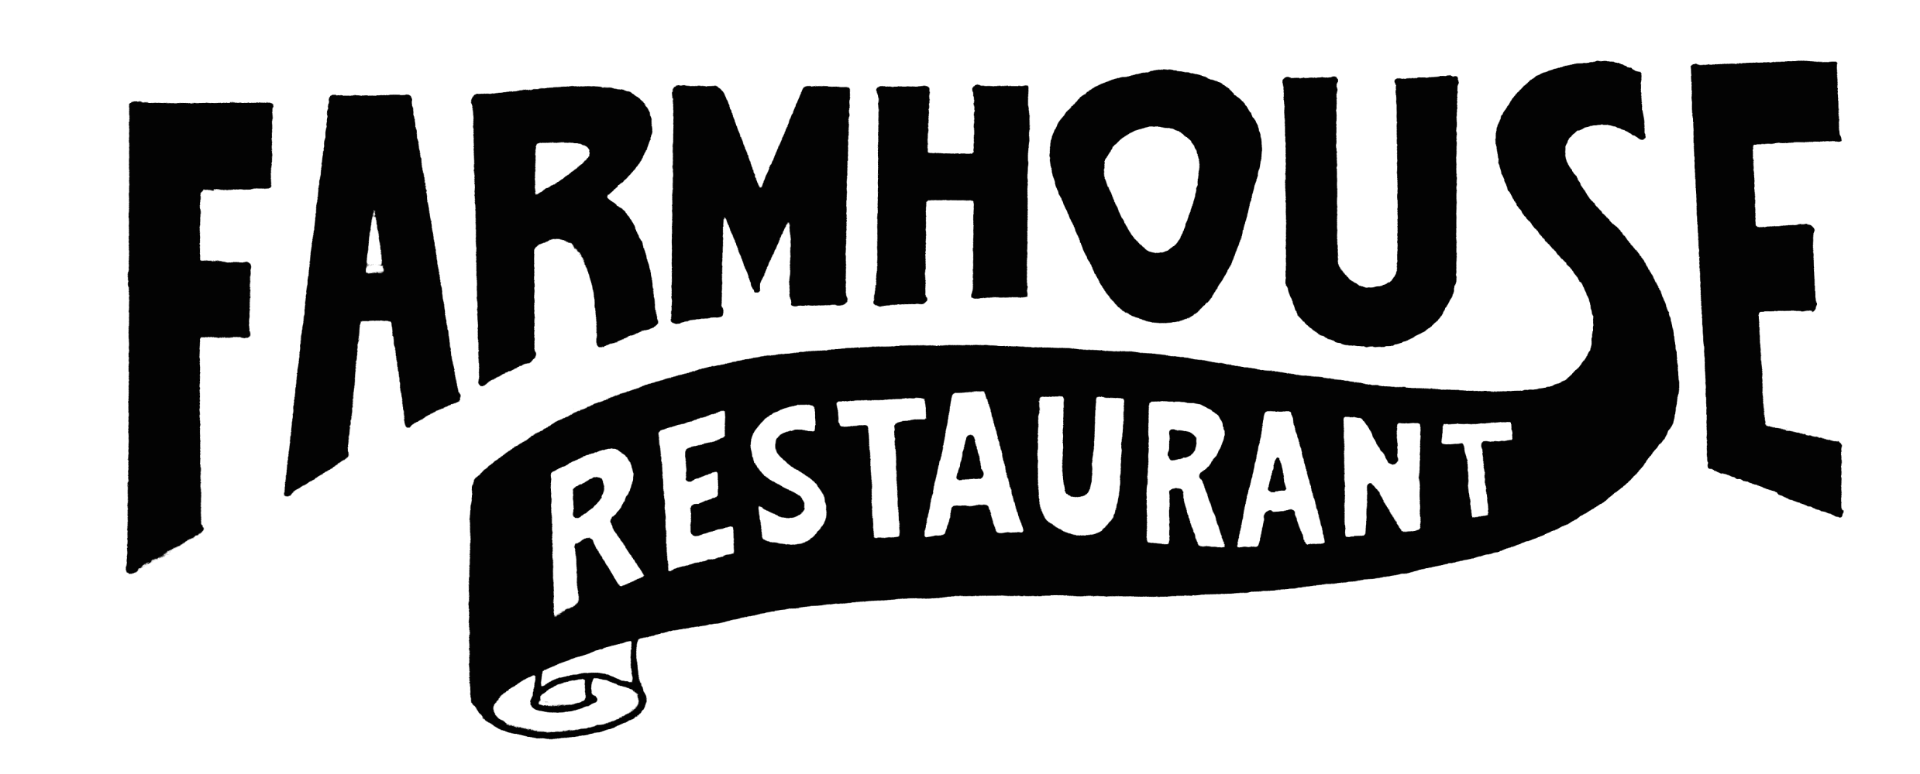 farmhouse restaurant logo